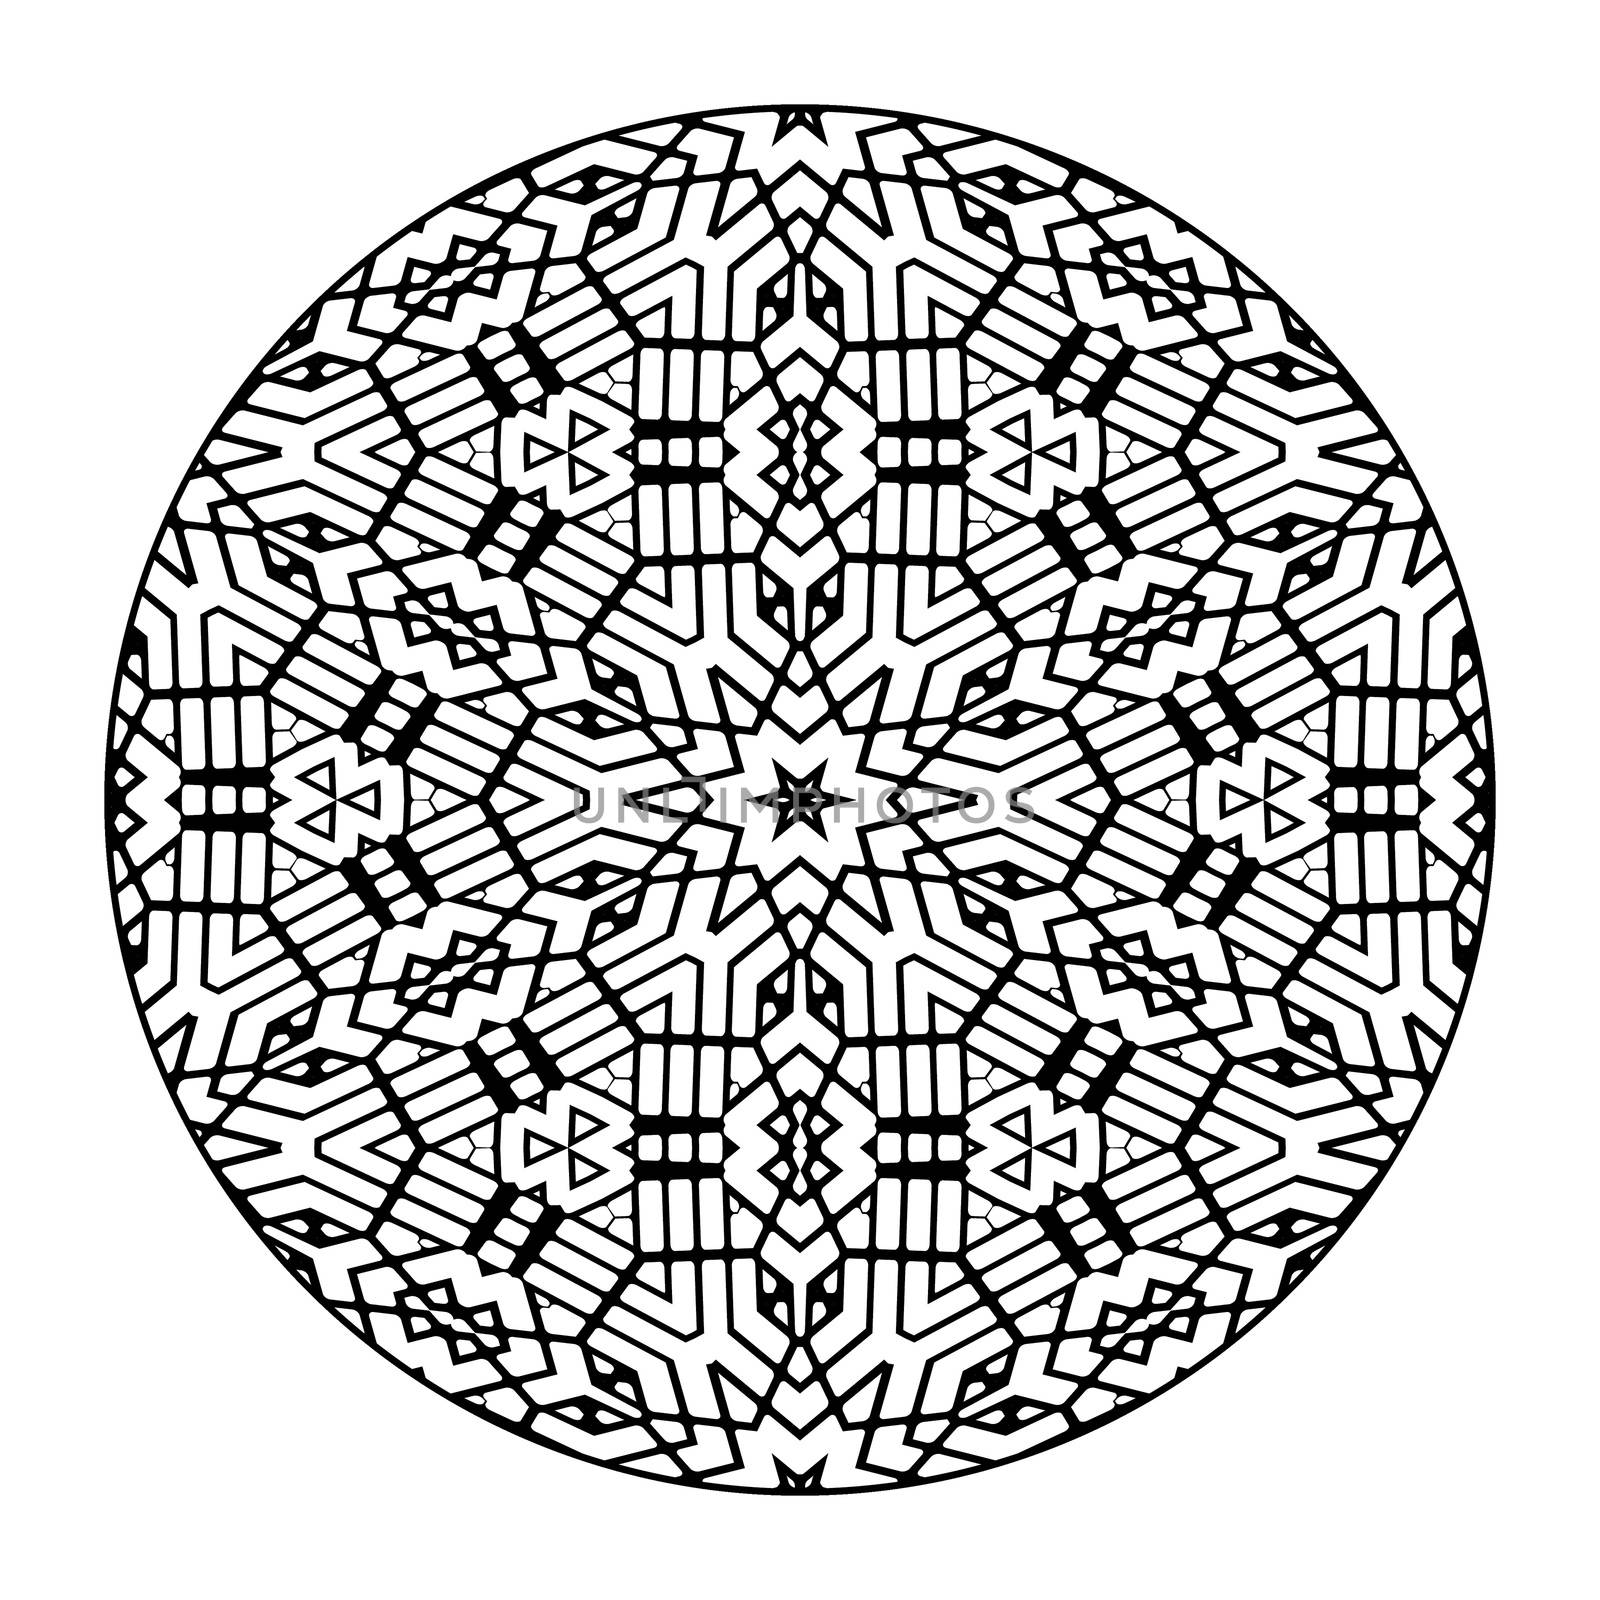 An image of a nice Mandala black and white